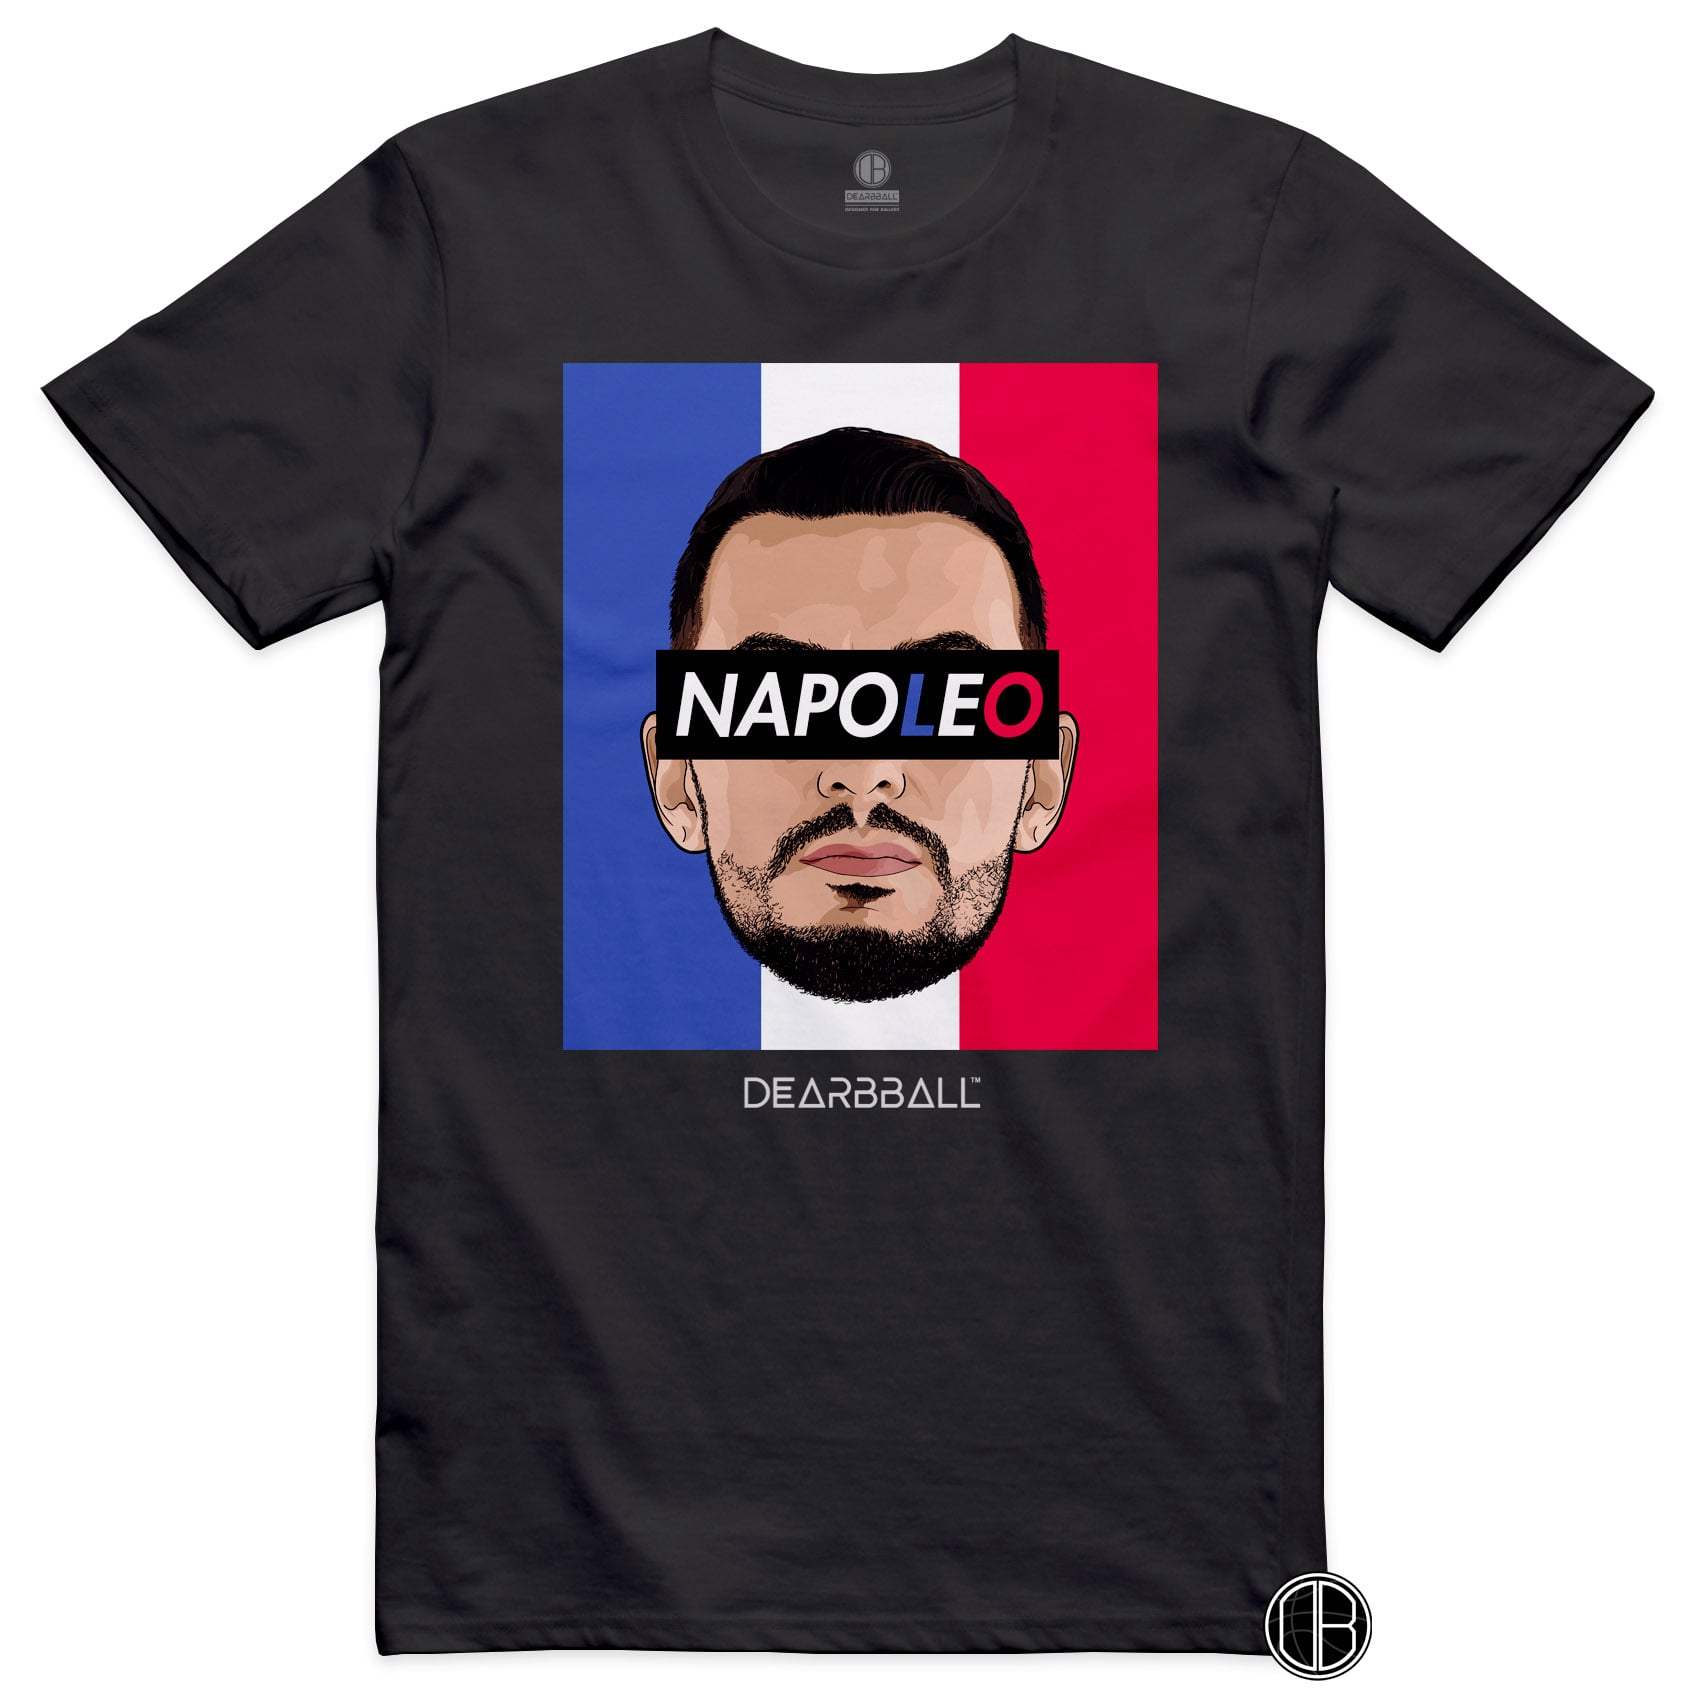 DearBBall T-Shirt - NapoLeo France Edition